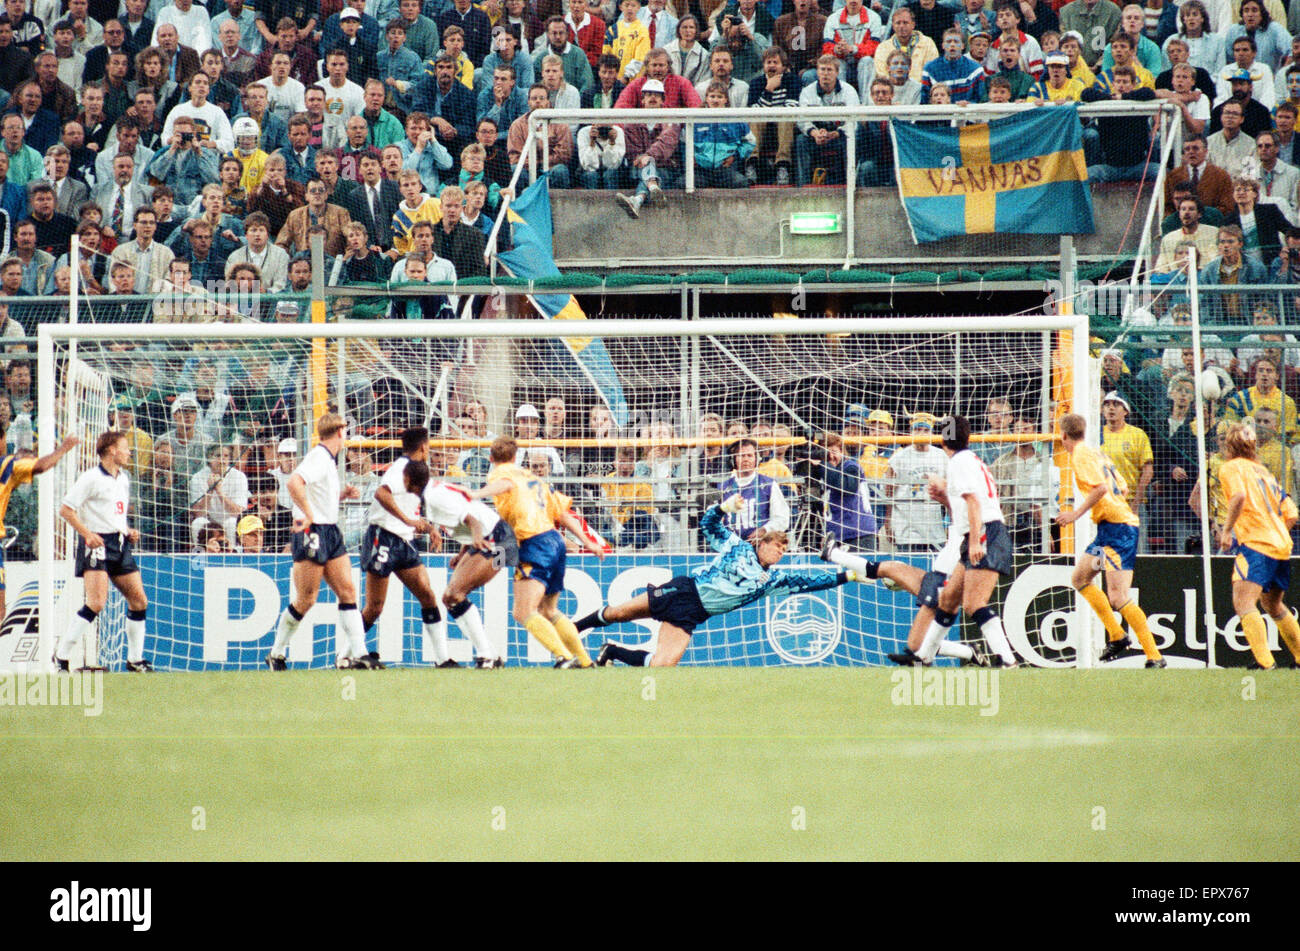 Sweden v England, European Championship Match, Group Stage, Group 1, R¿undastadion, Solna, Sweden,  17th June 1992.   Final score: Sweden 2-1 England Stock Photo